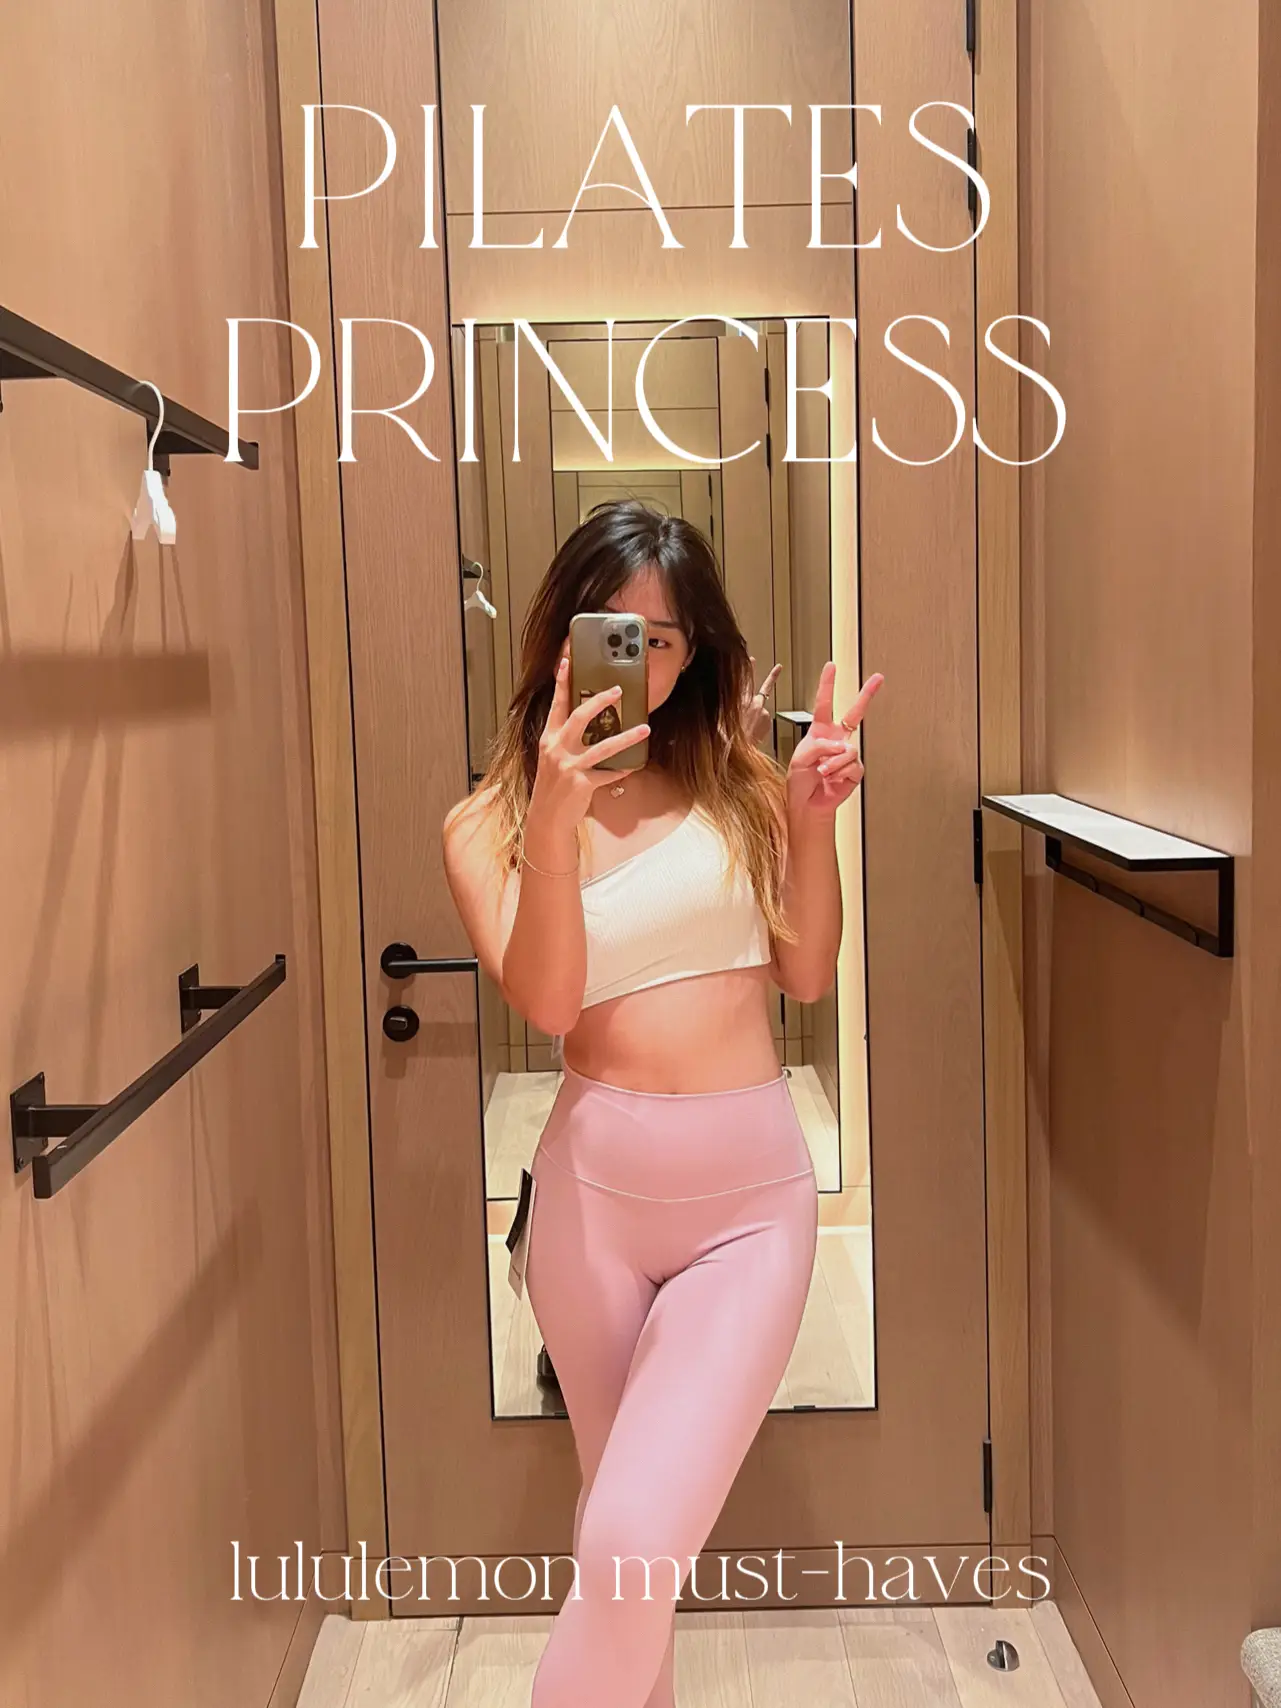 Pink Pilates princess 🎀⭐️☁️.. Low rise yoga pants are heaven